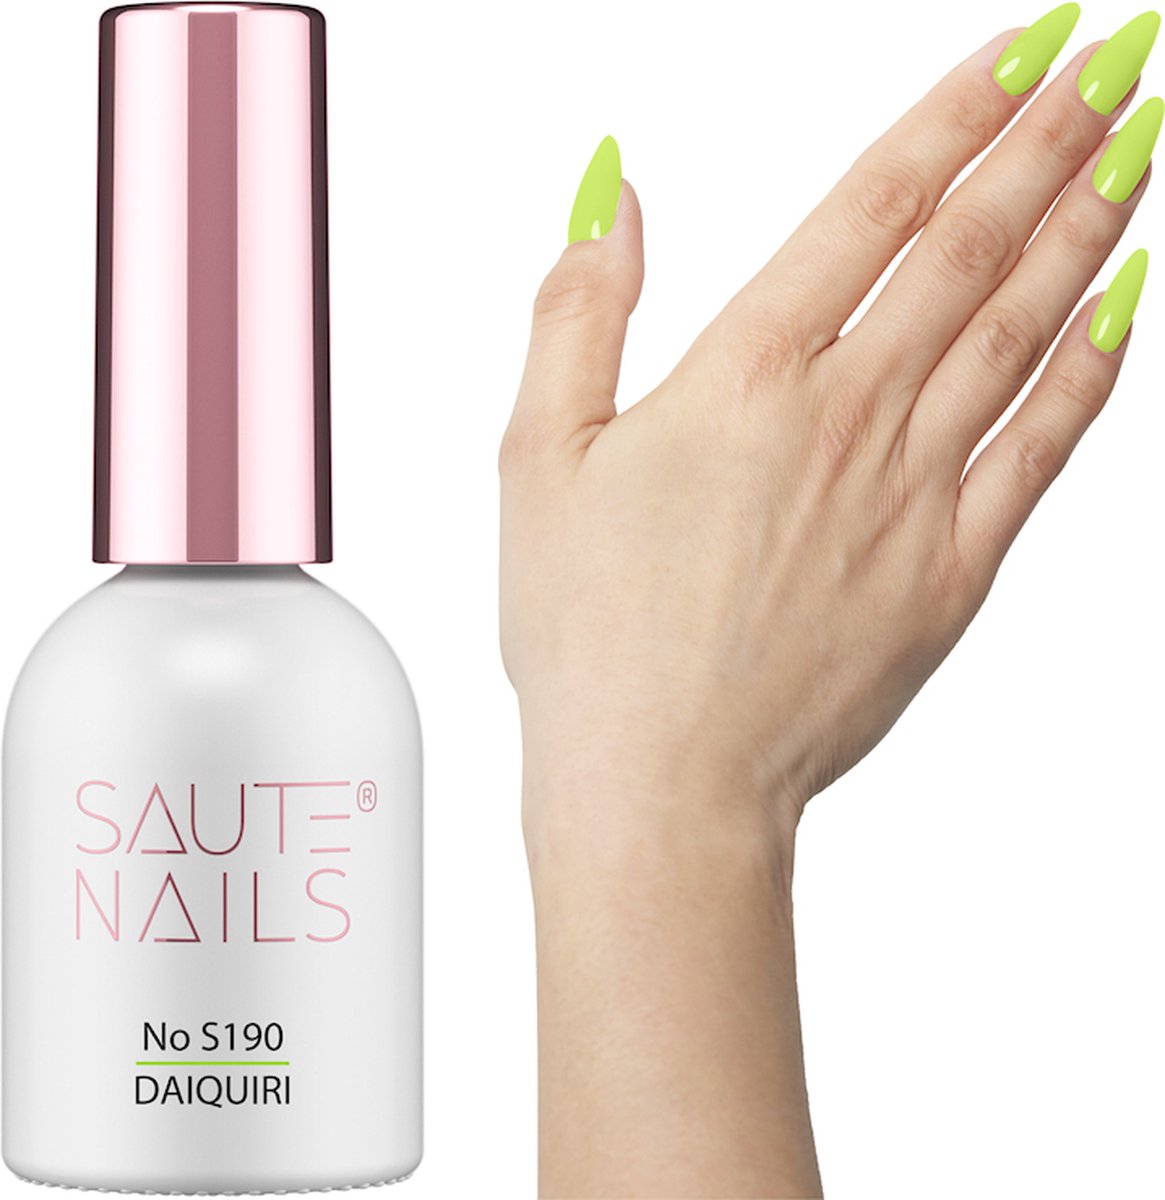 SAUTE Nails Neon Groen UV/LED Gellak 8ml. - S190 Daiquiri